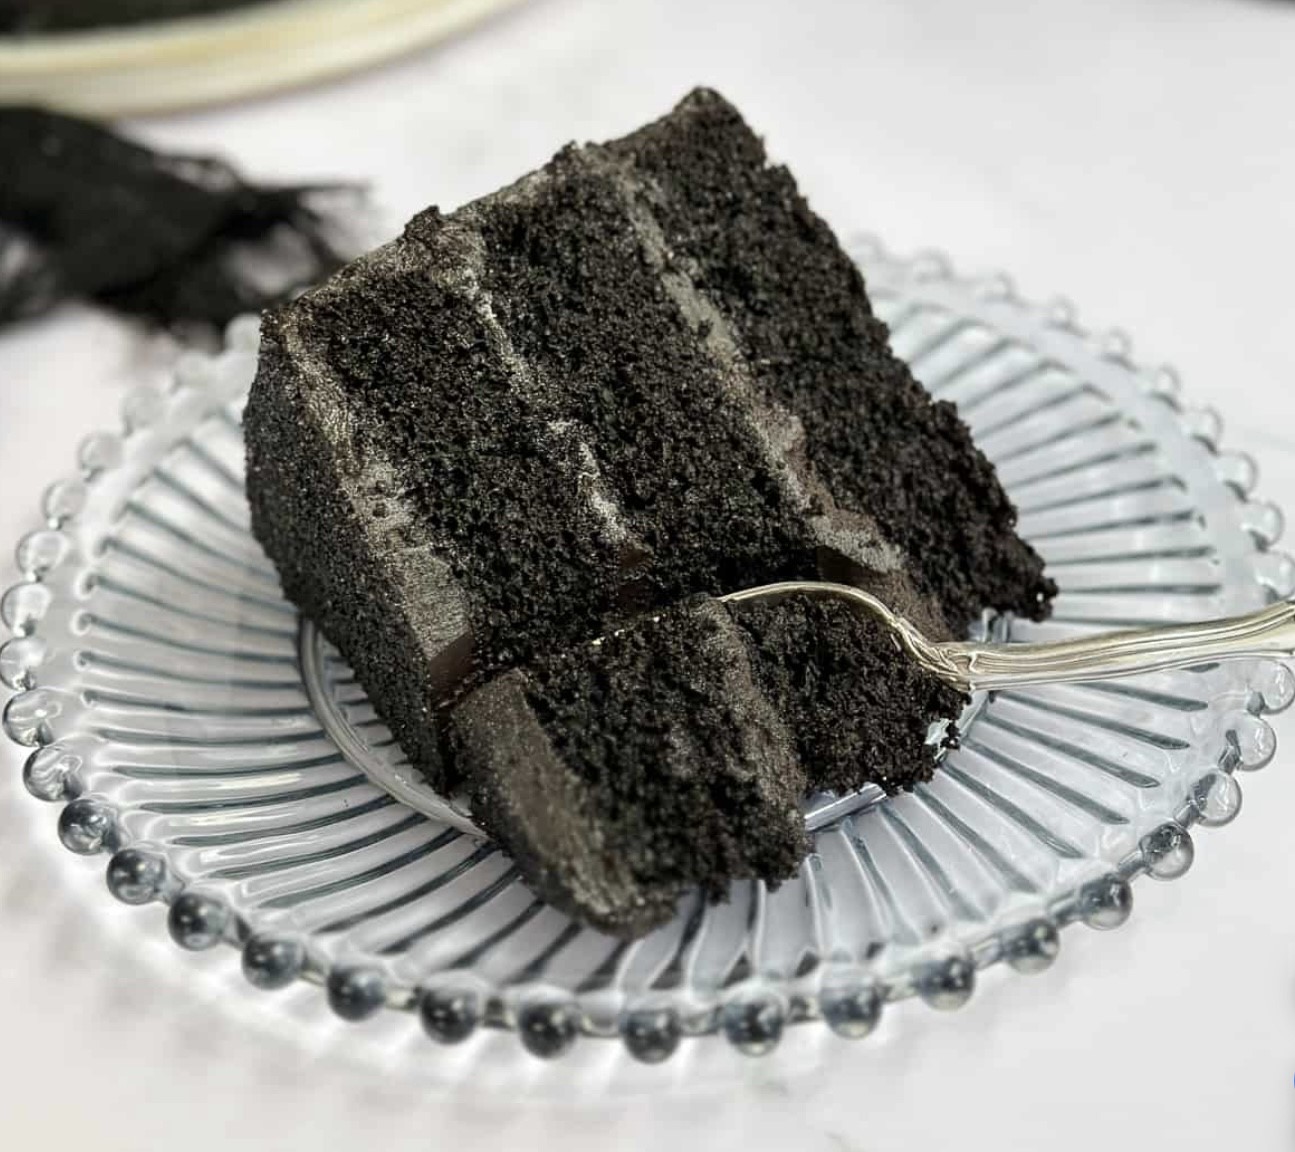 black chocolate cake